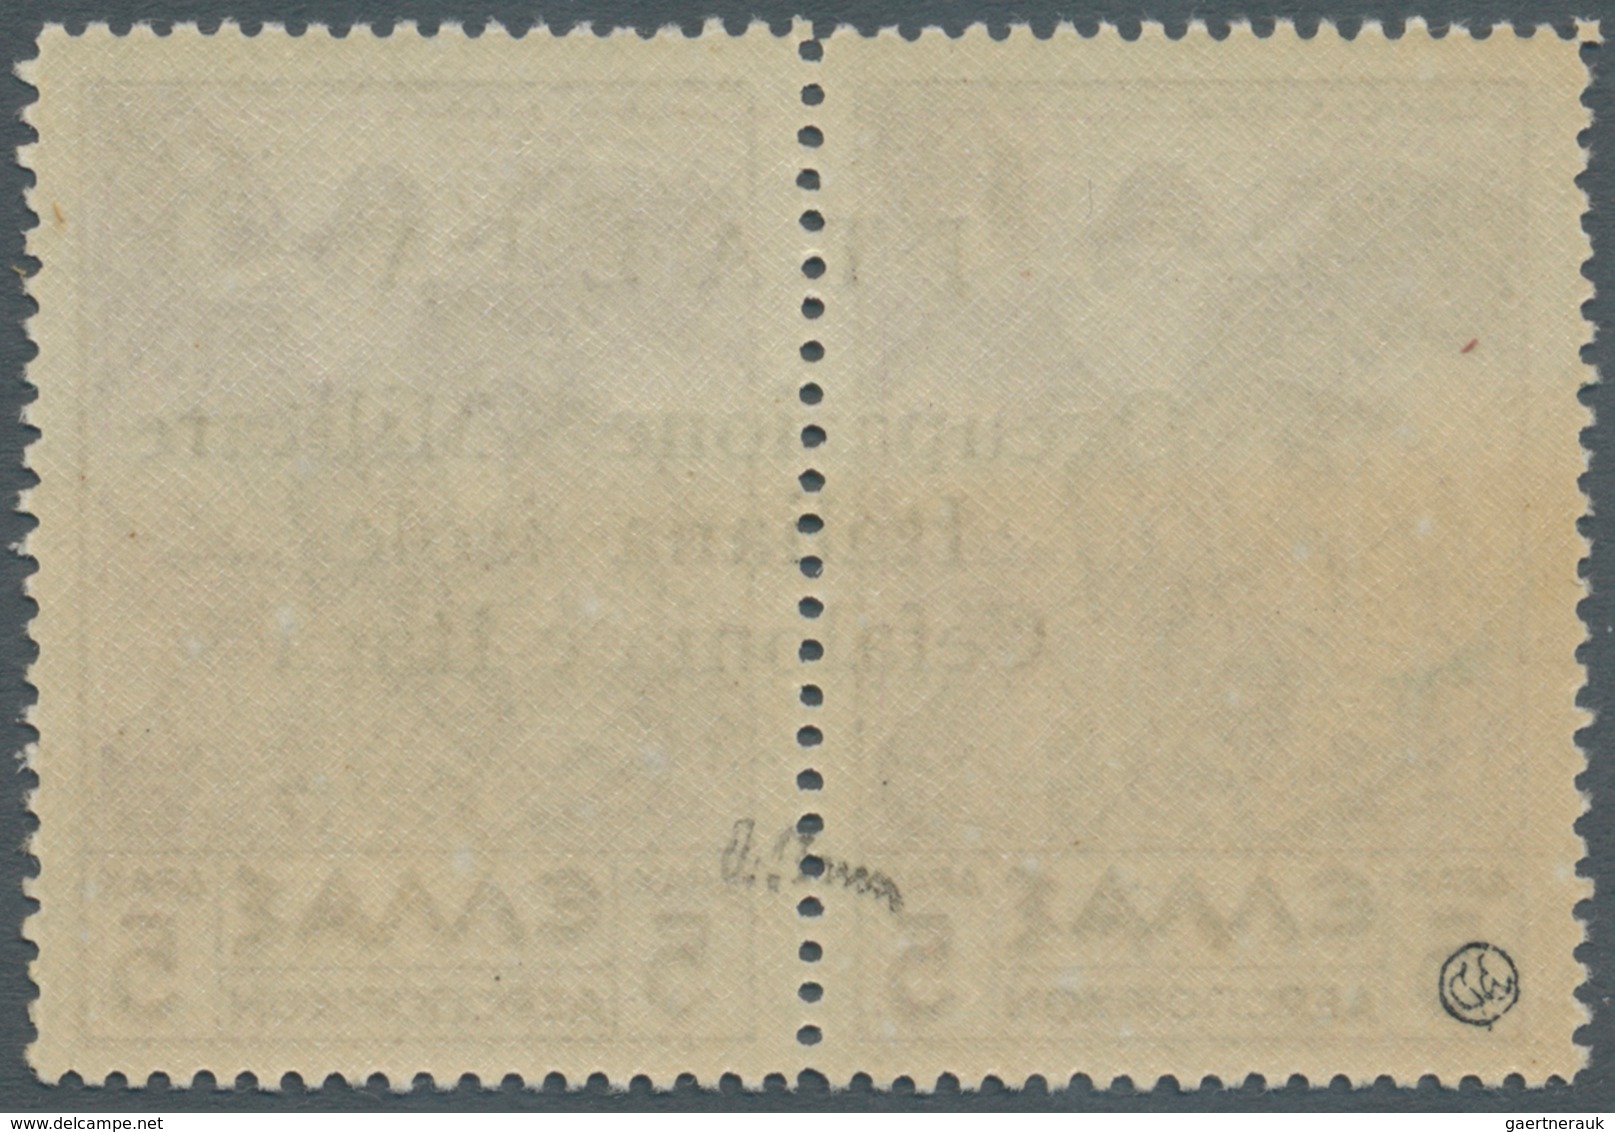 Ionische Inseln - Lokalausgaben: Kefalonia Und Ithaka: 1941, Argostoli Issue, Airmail Stamp 5dr. Vio - Ionian Islands